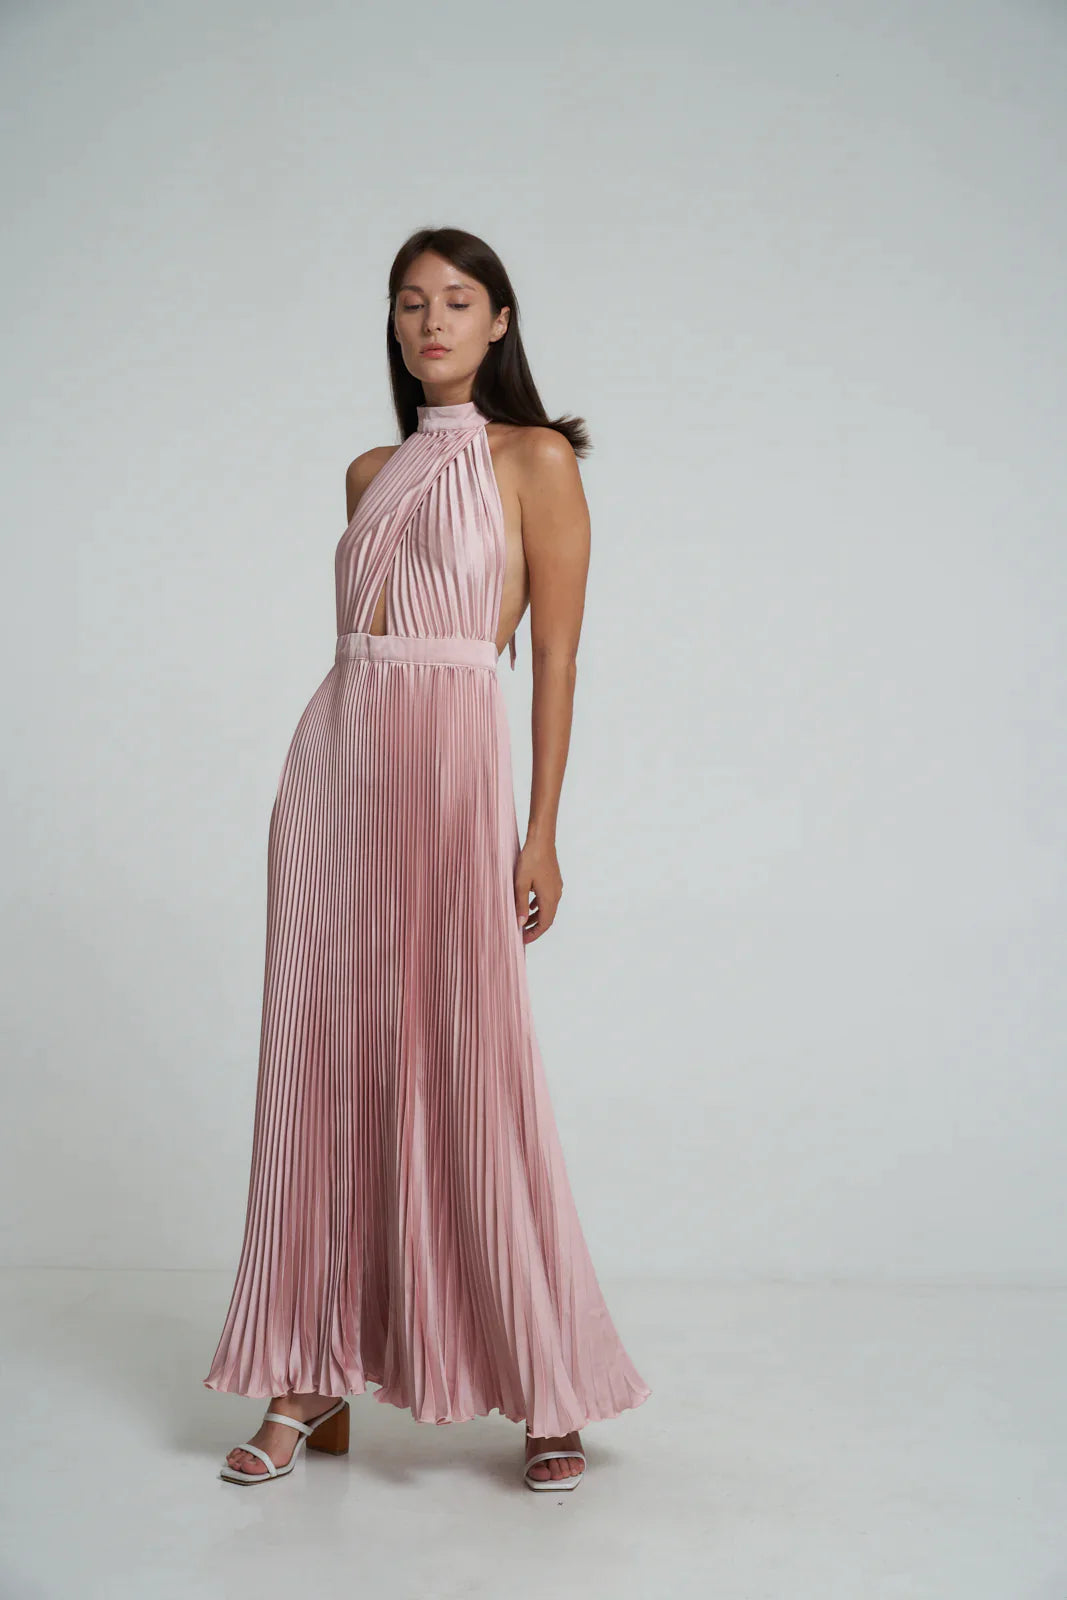 Renaissance Gown Ballet Pink - Premium Long dress from Marina St Barth - Just $455.00! Shop now at Marina St Barth